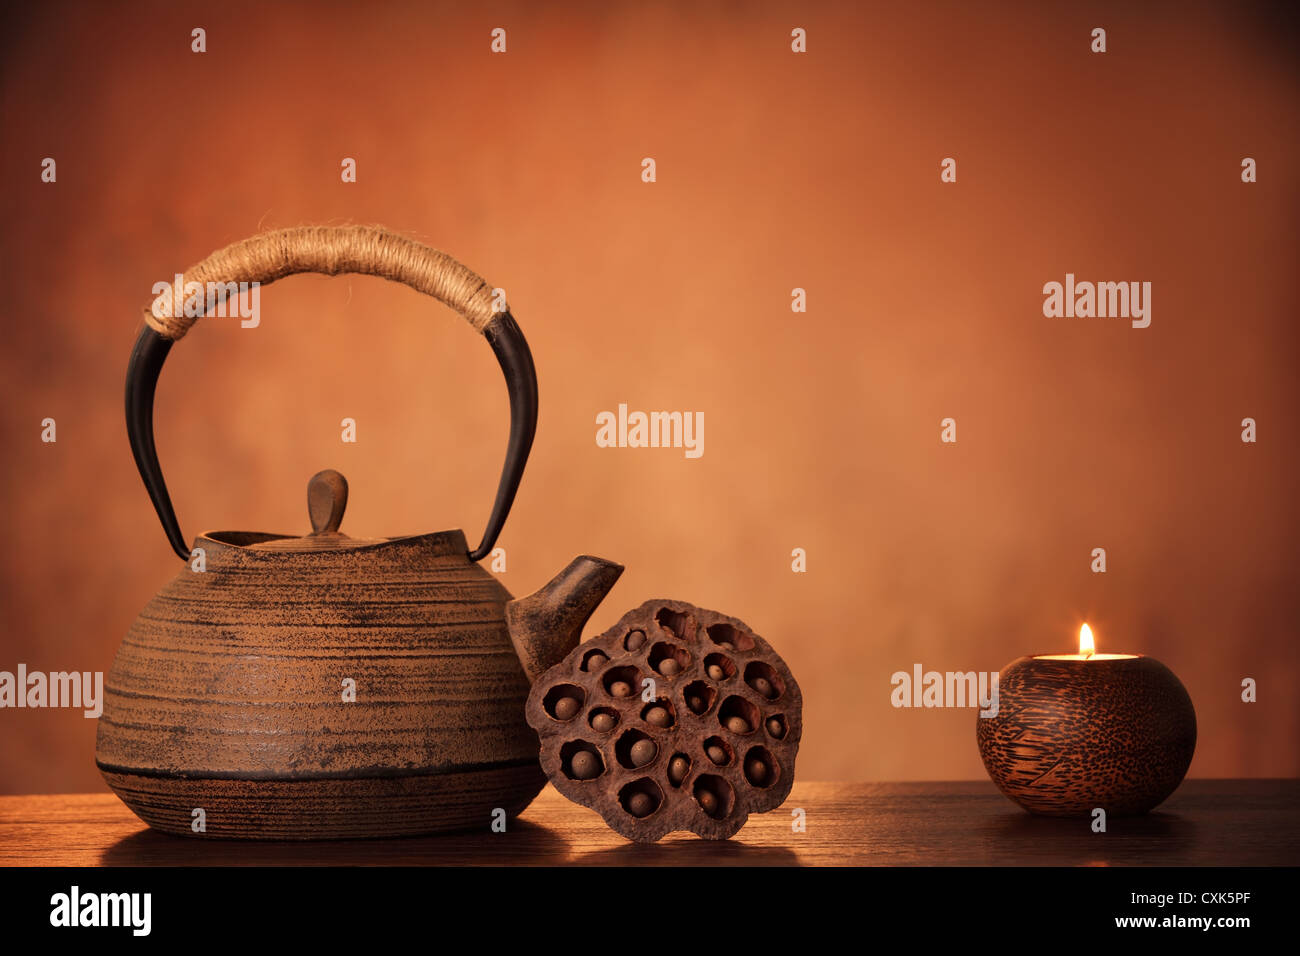 Black iron asian teapot and burning candle,vintage style. Stock Photo